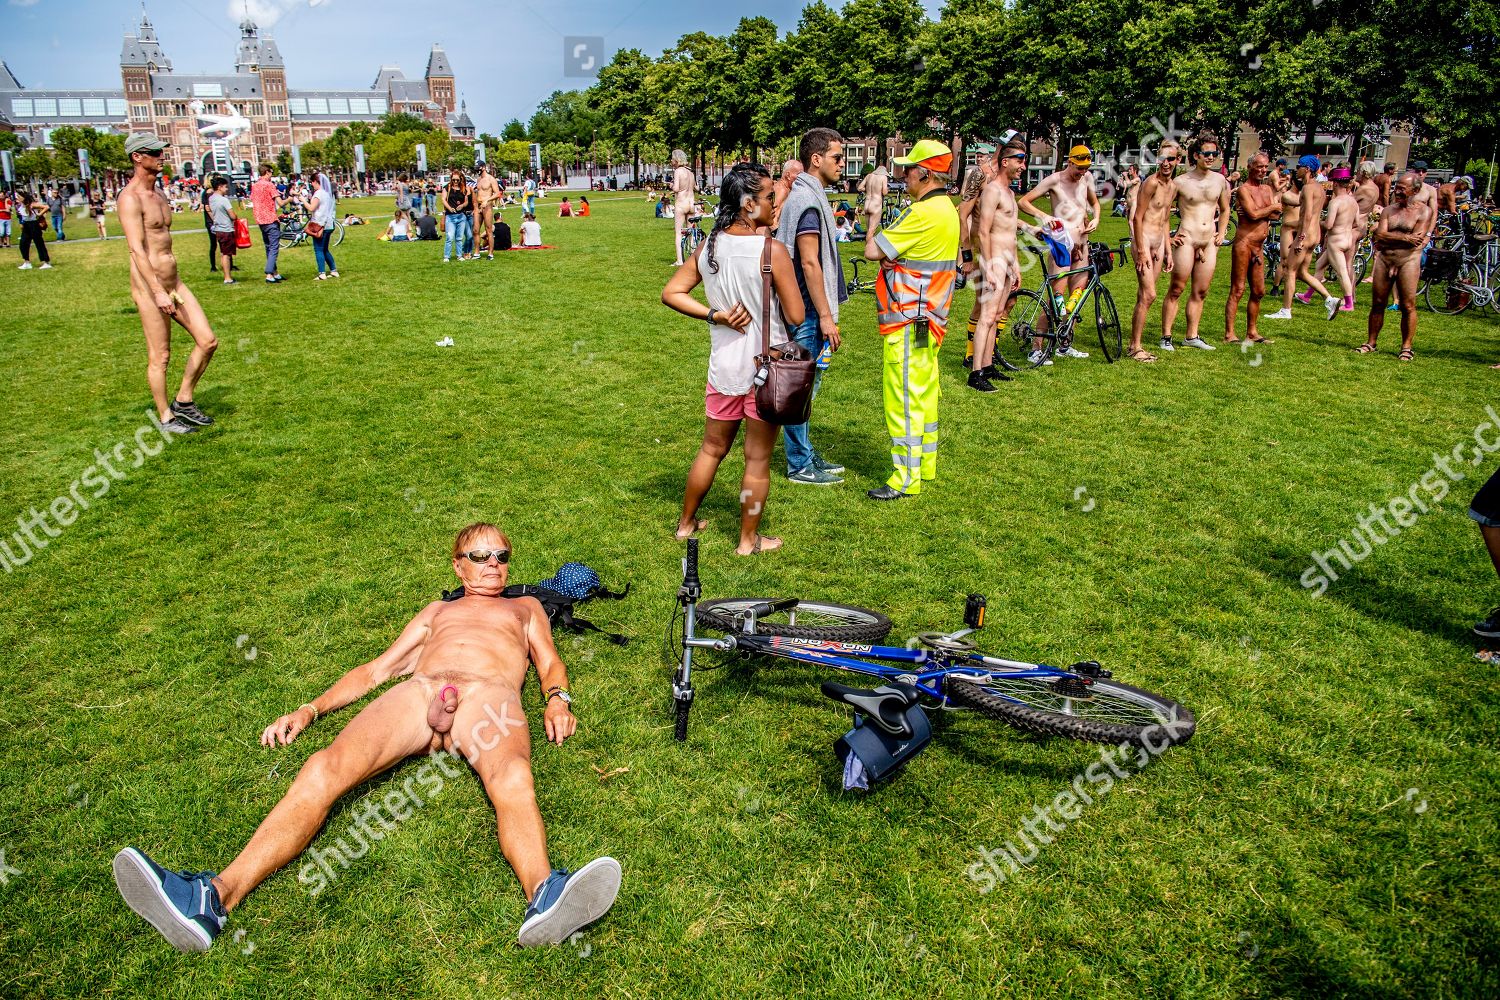 Amsterdam Naked News